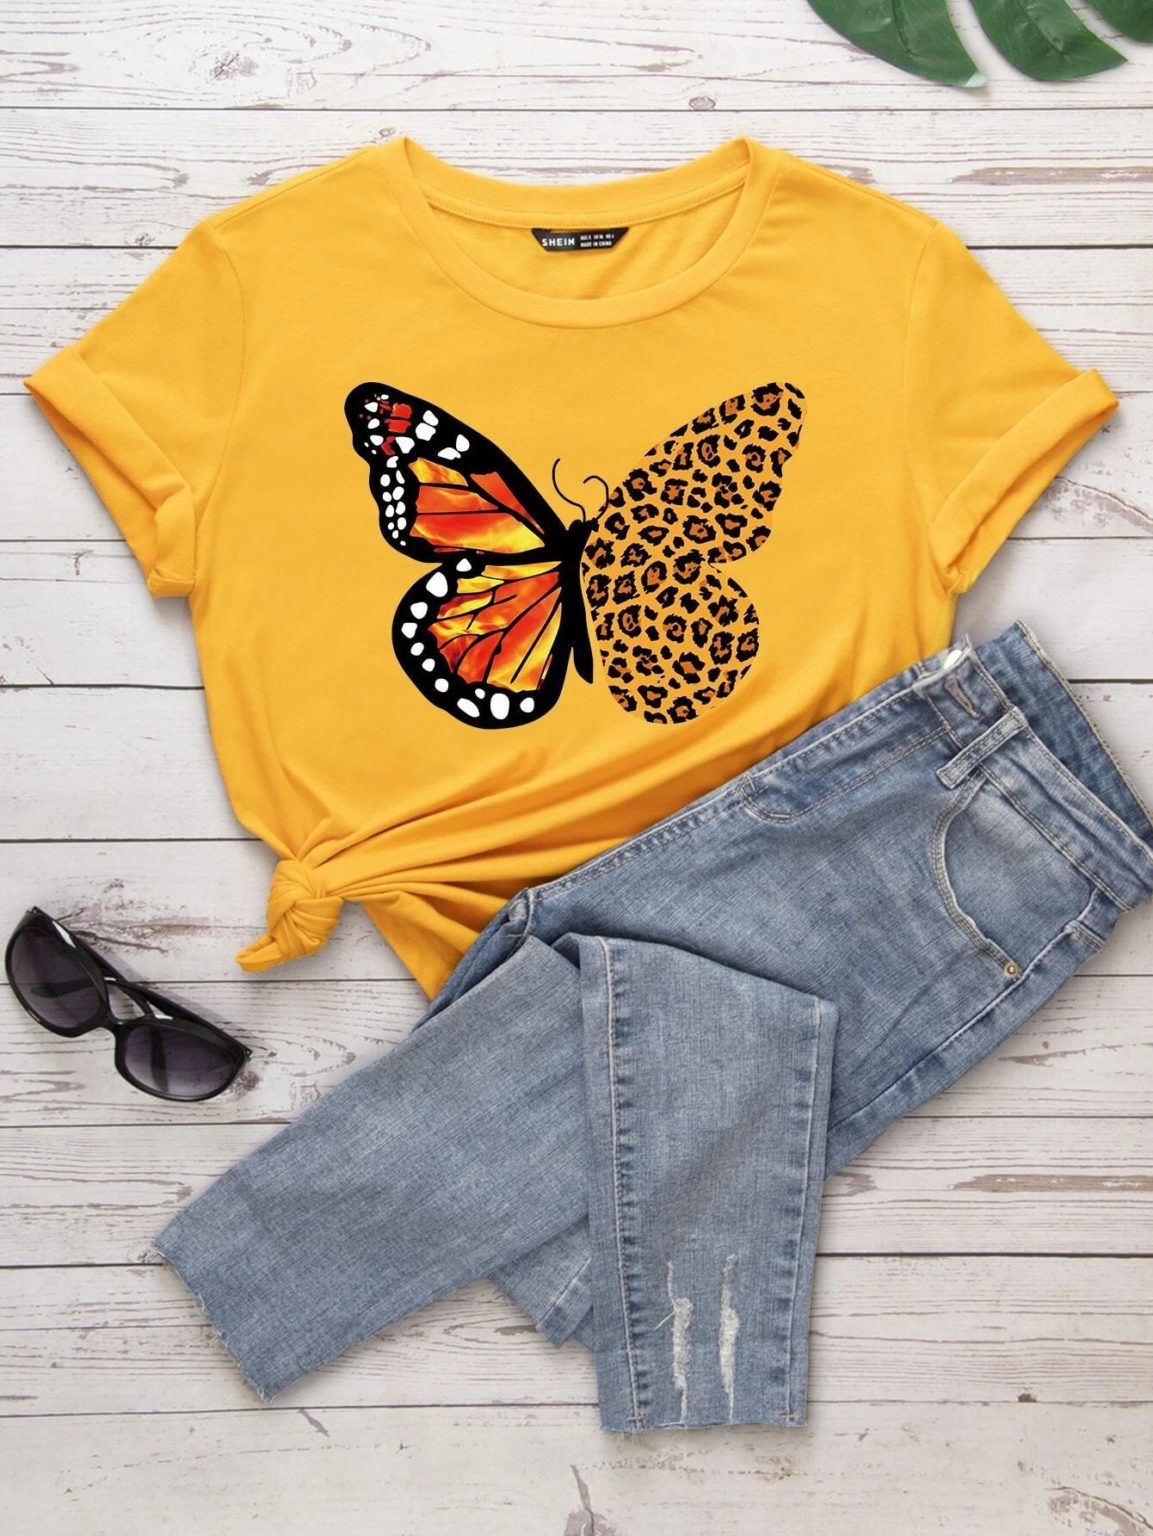 Дамска тениска Butterfly / Leopard DTG